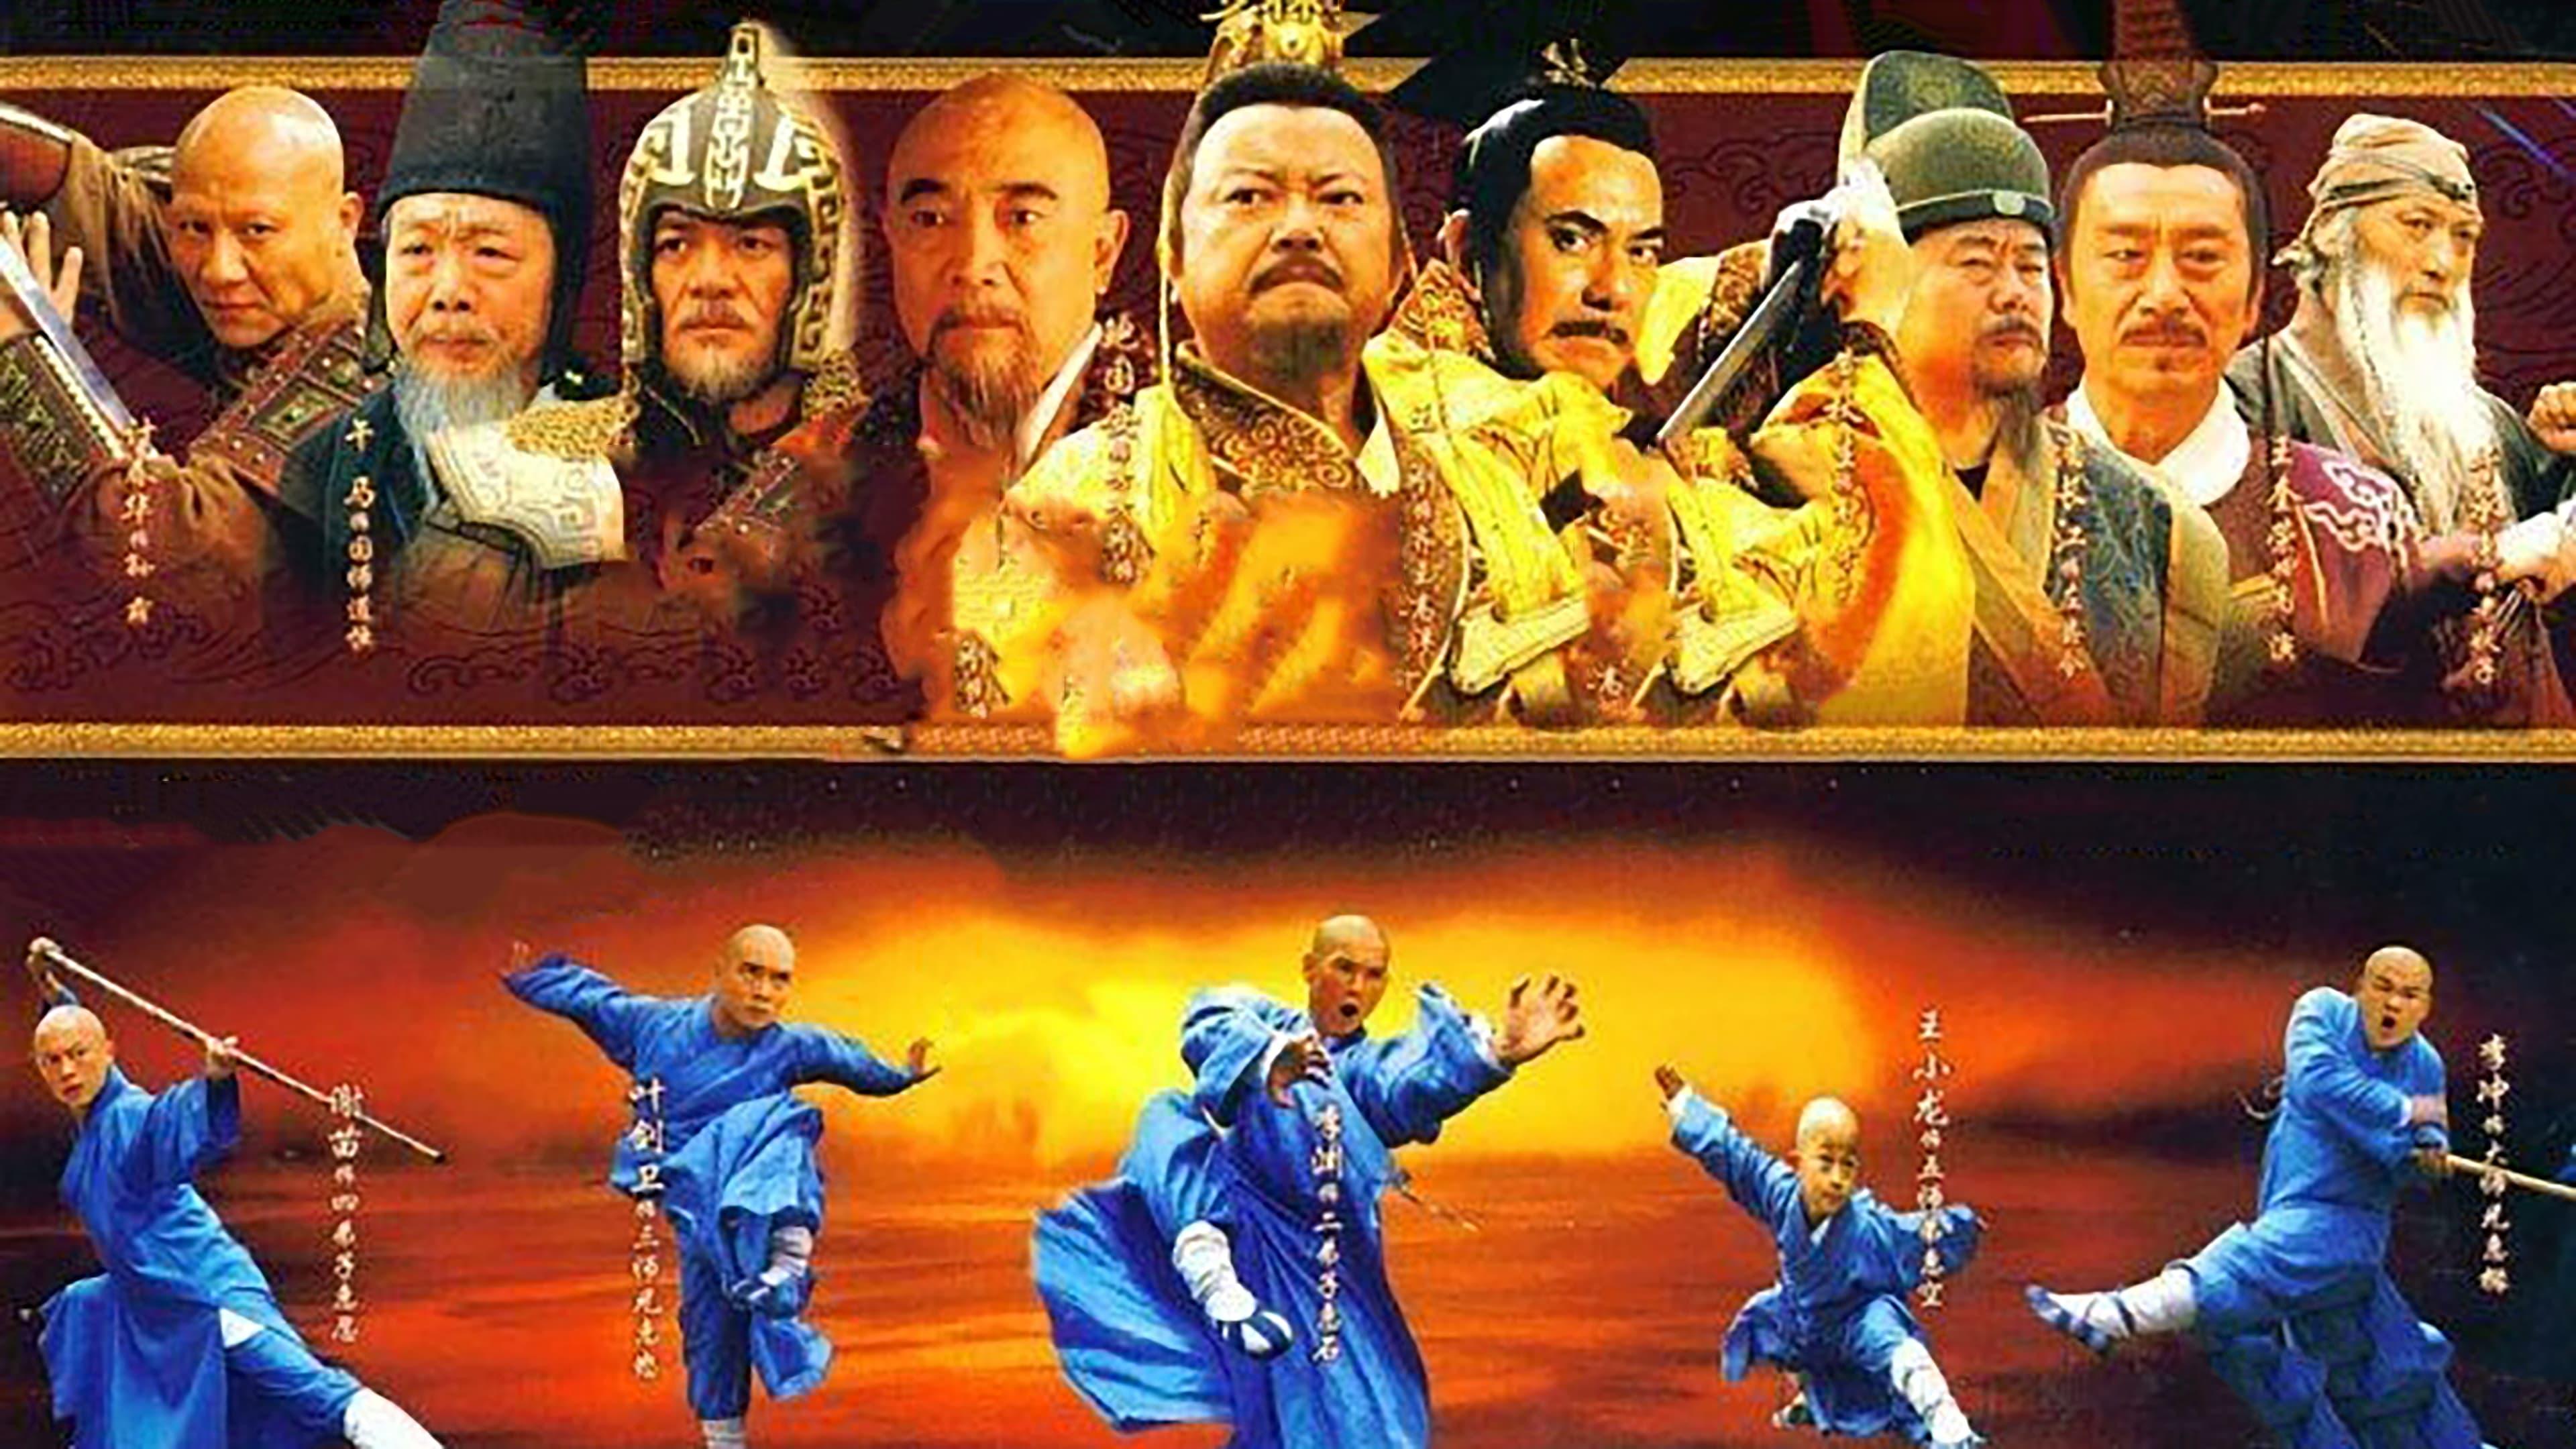 A Legend of Shaolin Temple backdrop